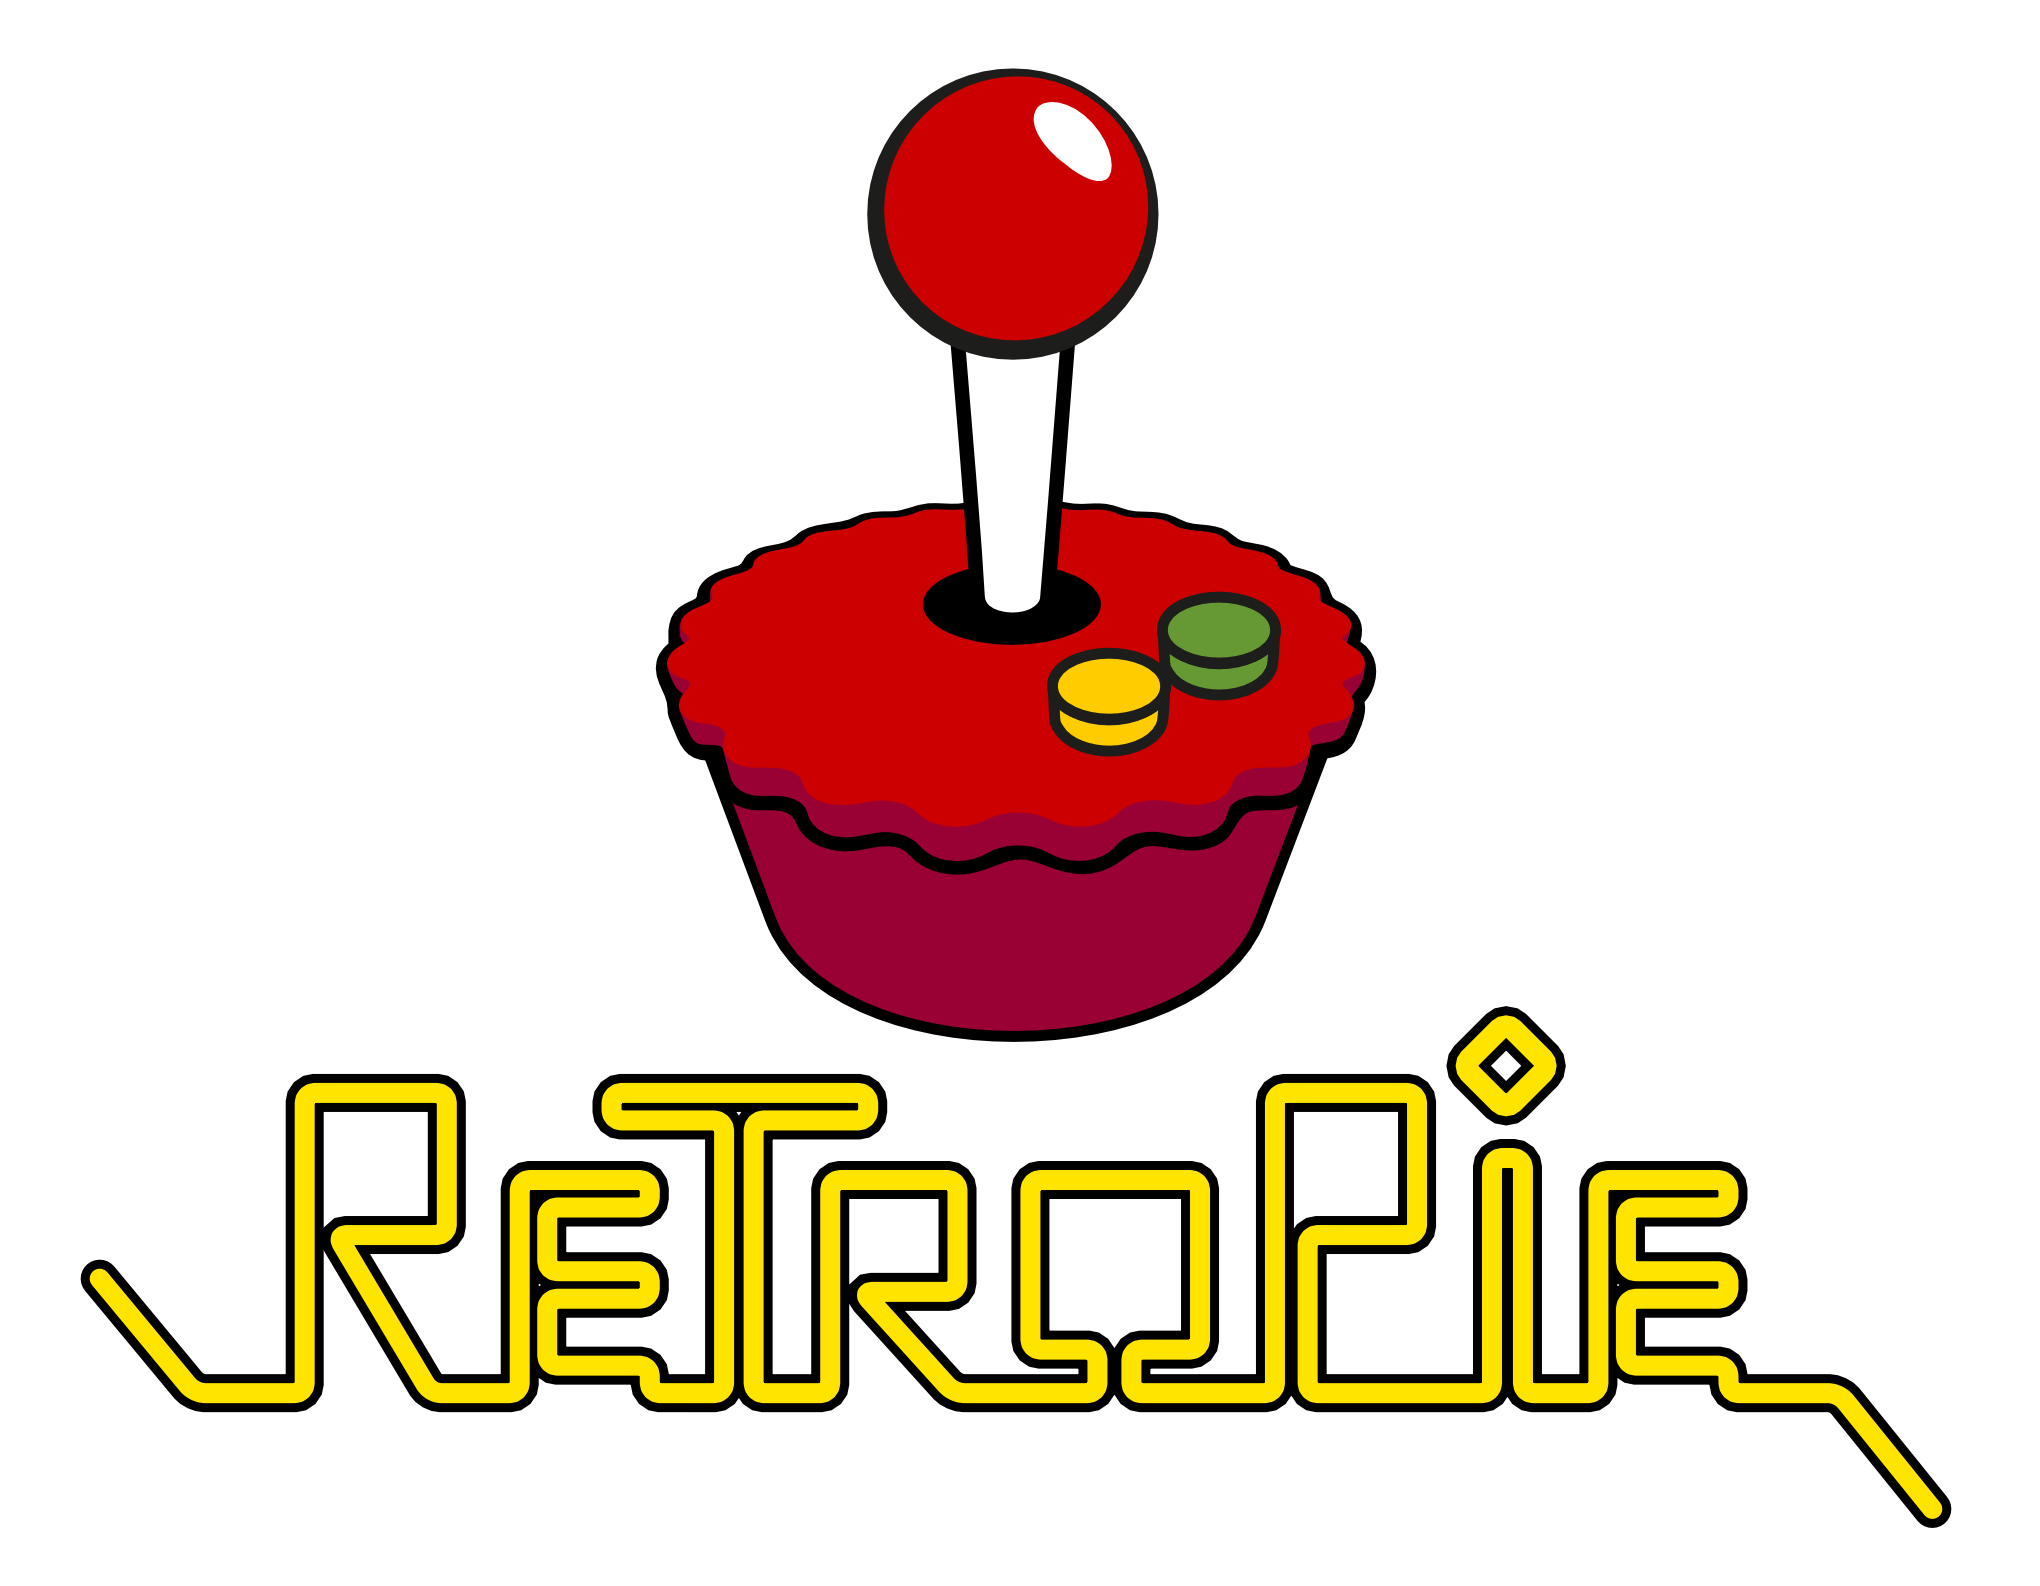 How to Create a RetroPie on Raspberry Pi &#8211; Graphical Guide